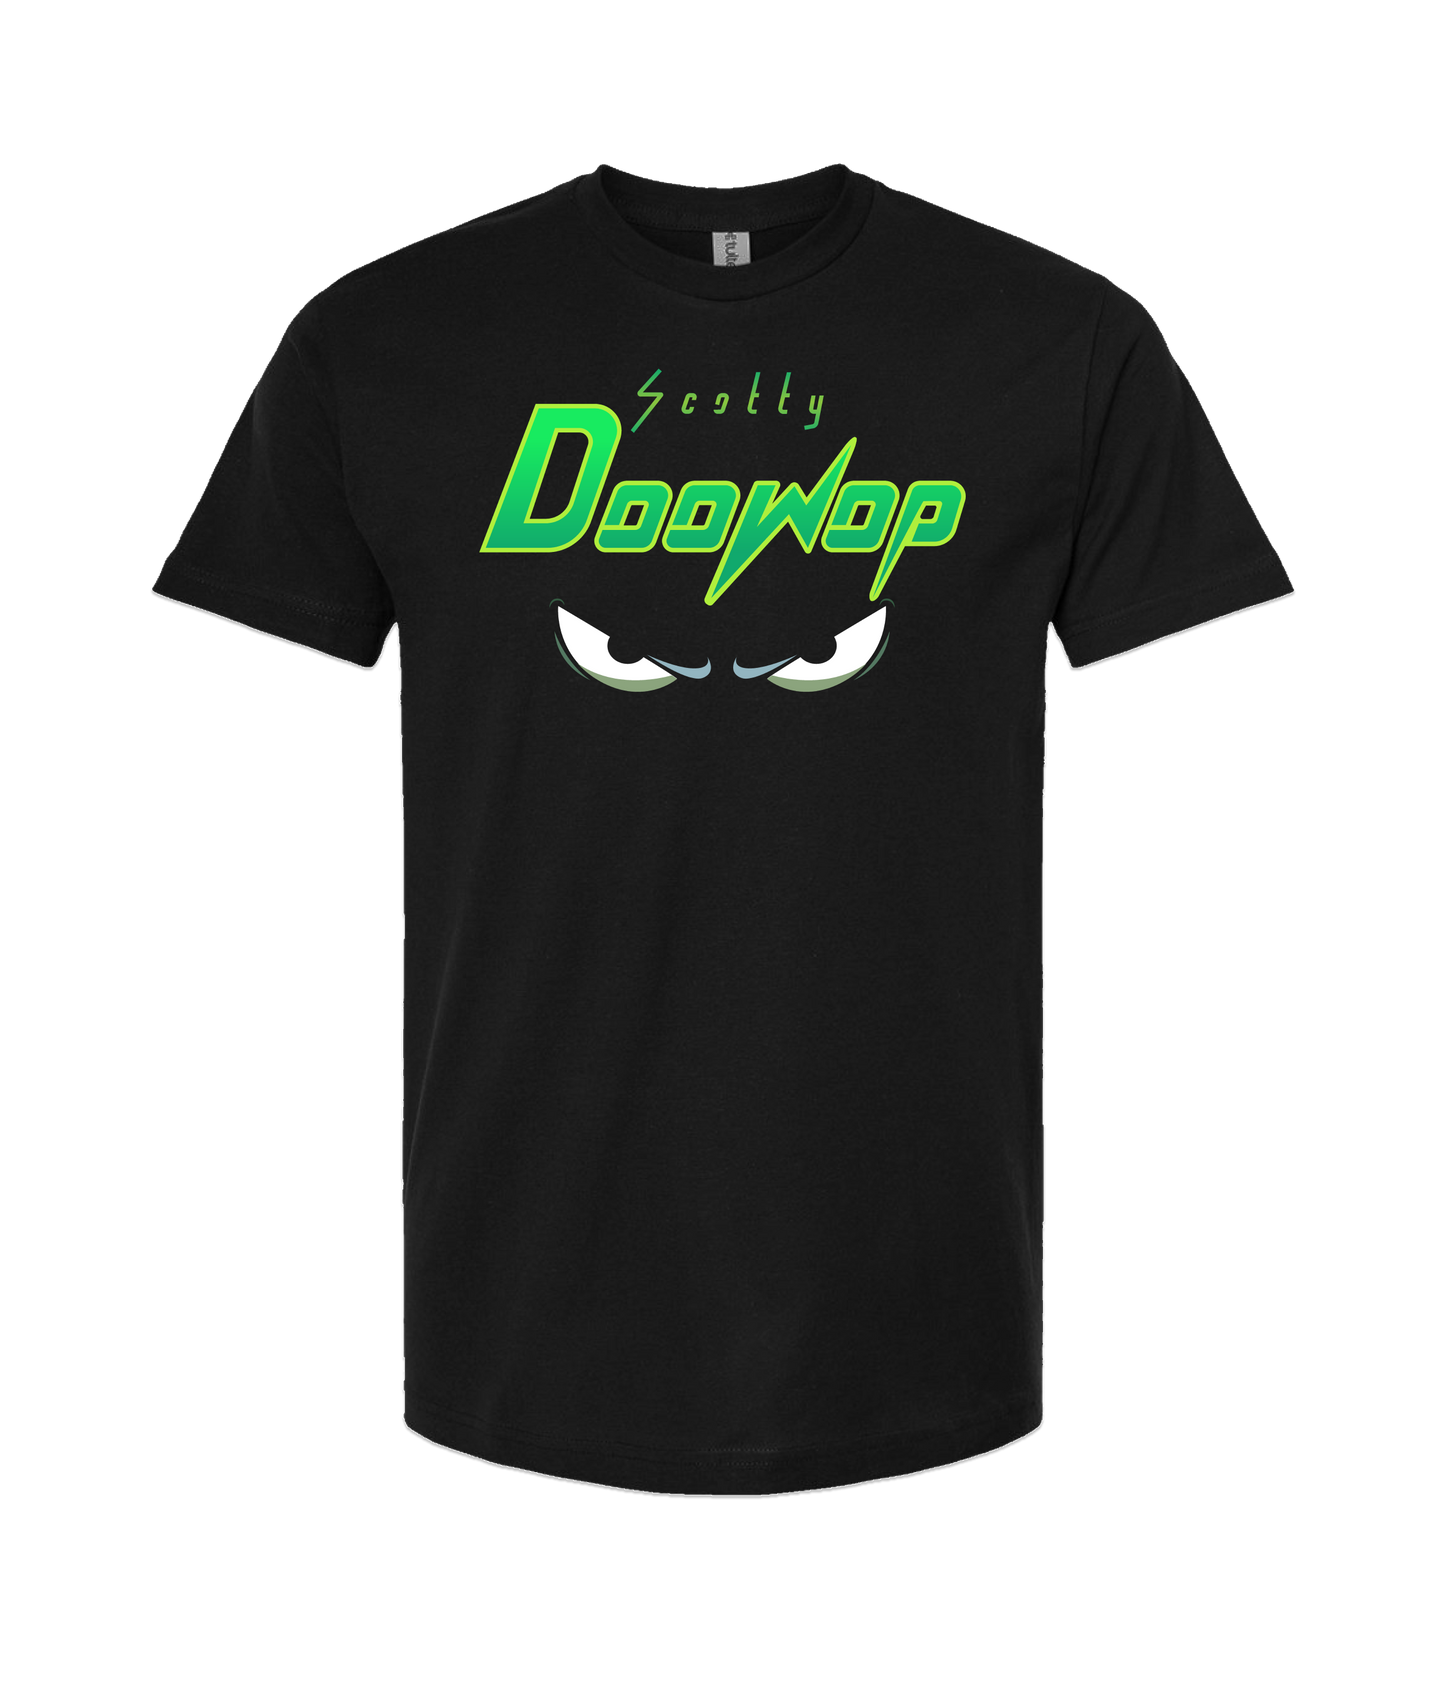 Scotty Doowop - Logo - Black T-Shirt